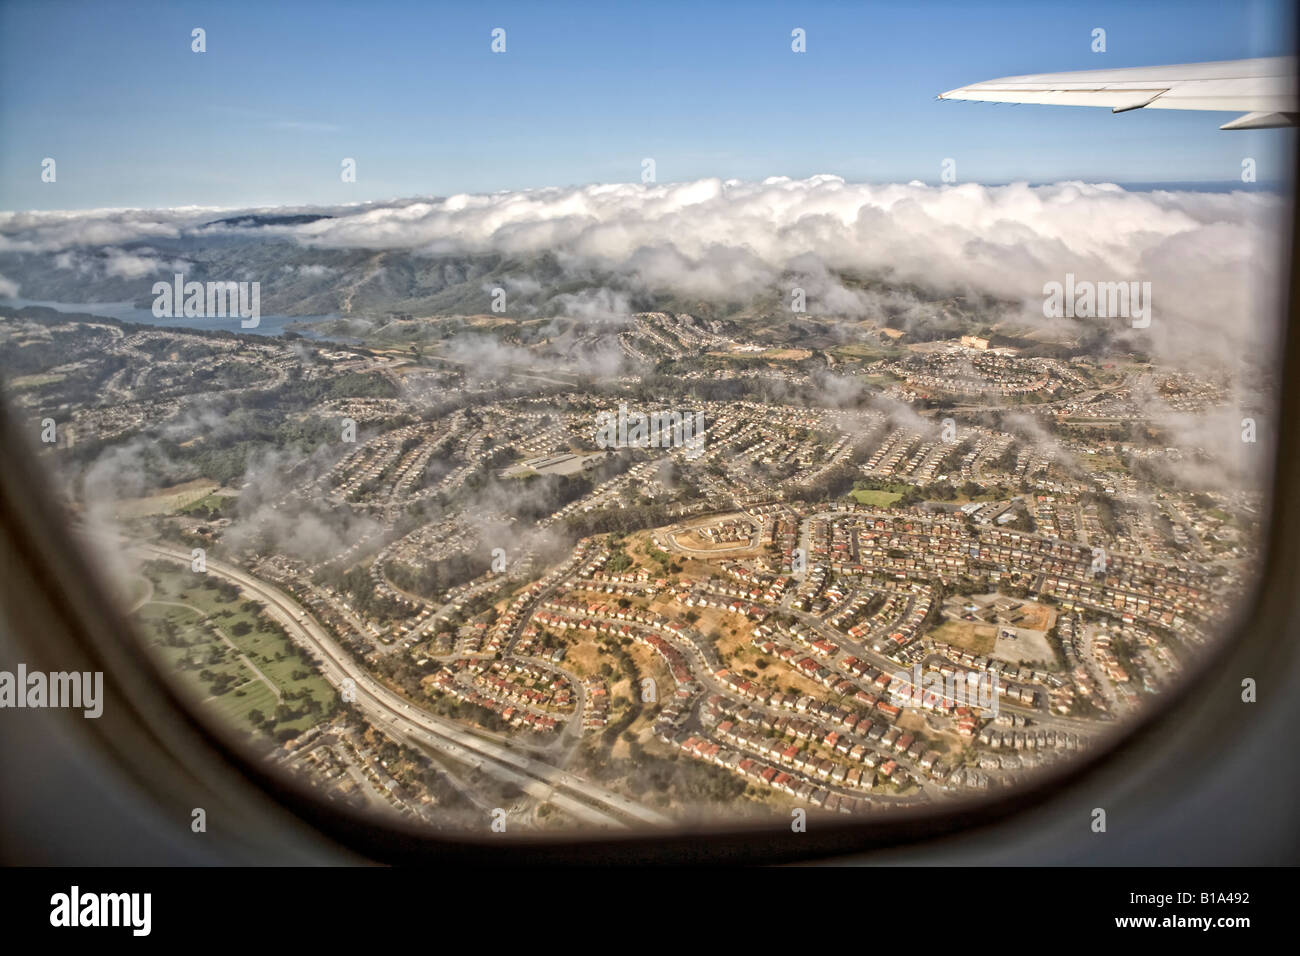 Foto aerea di area metropolitana vicino a San Francisco Airport, coprendo san Andreas anomalia, San Bruno, South San Francisco Foto Stock